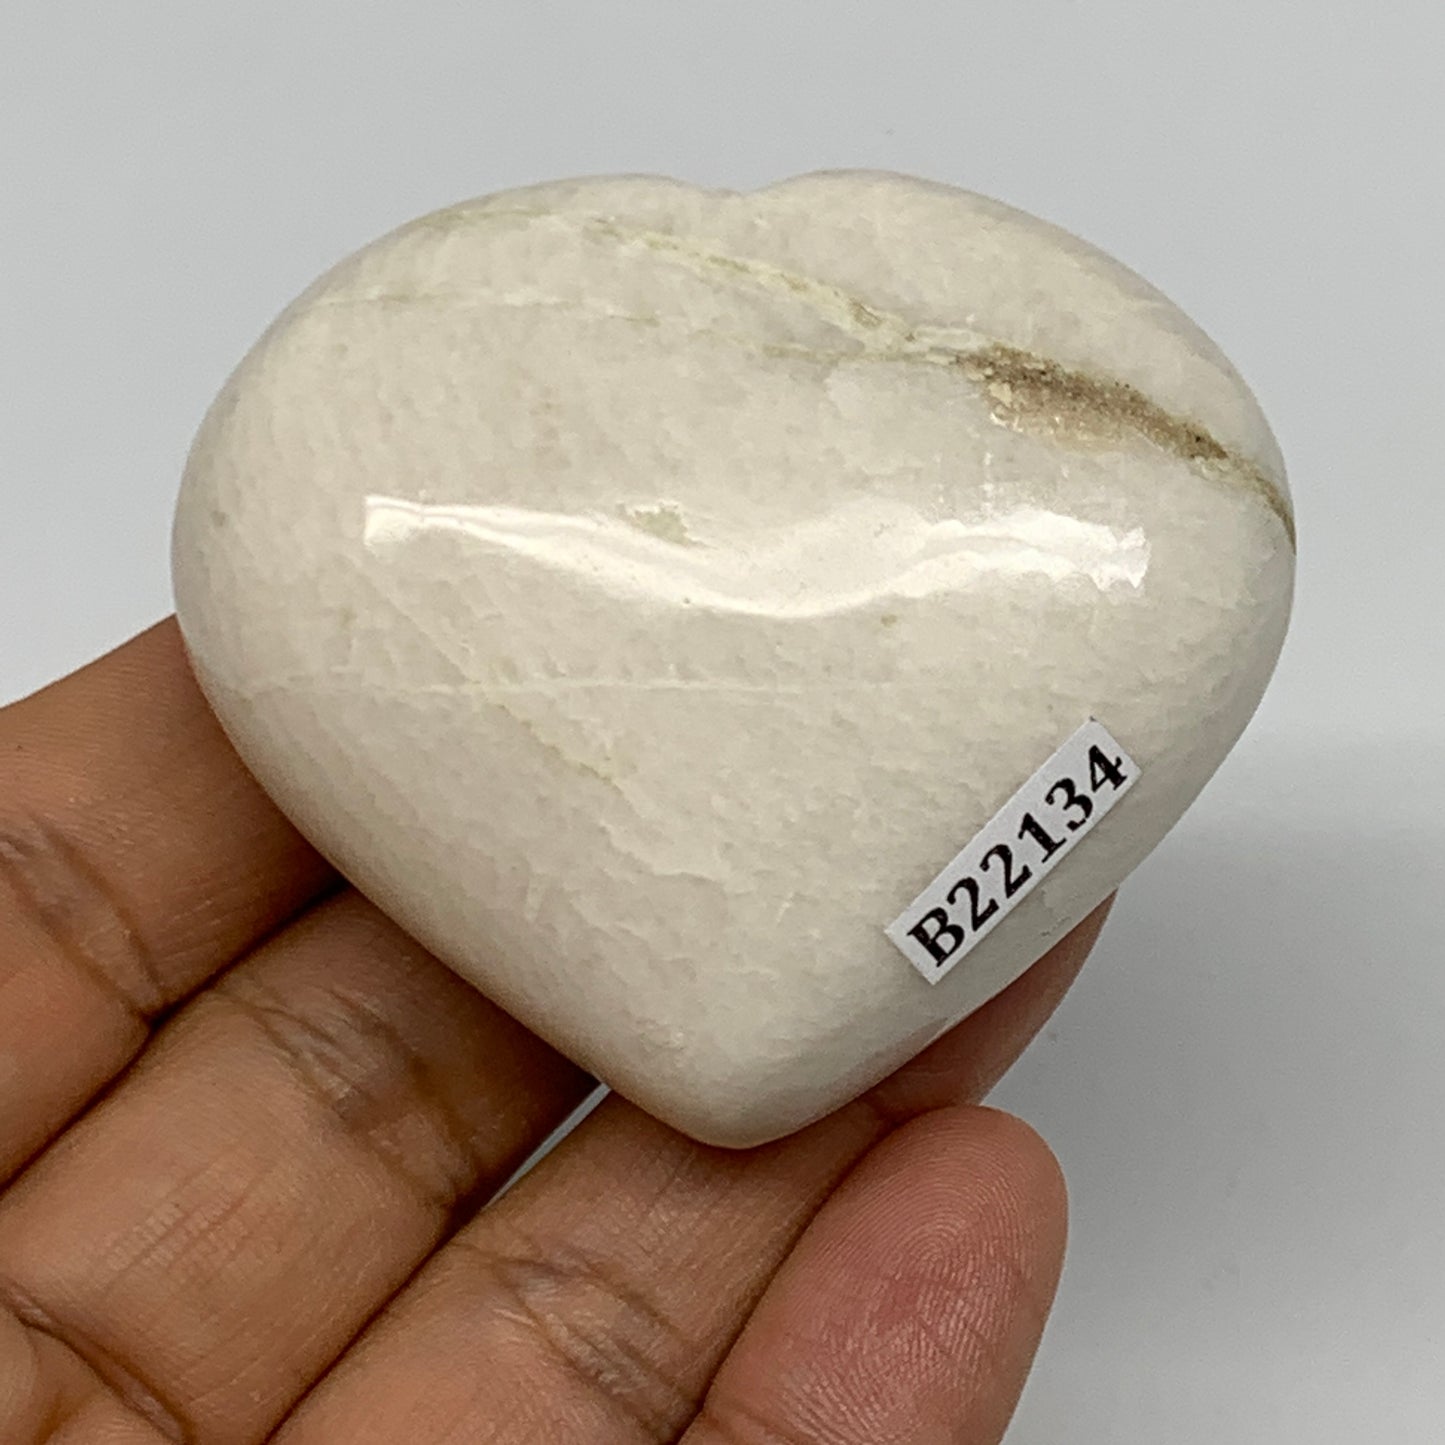 92.6g, 2"x2.3"x0.9", White Moonstone Heart Crystal Polished Gemstone, B22134